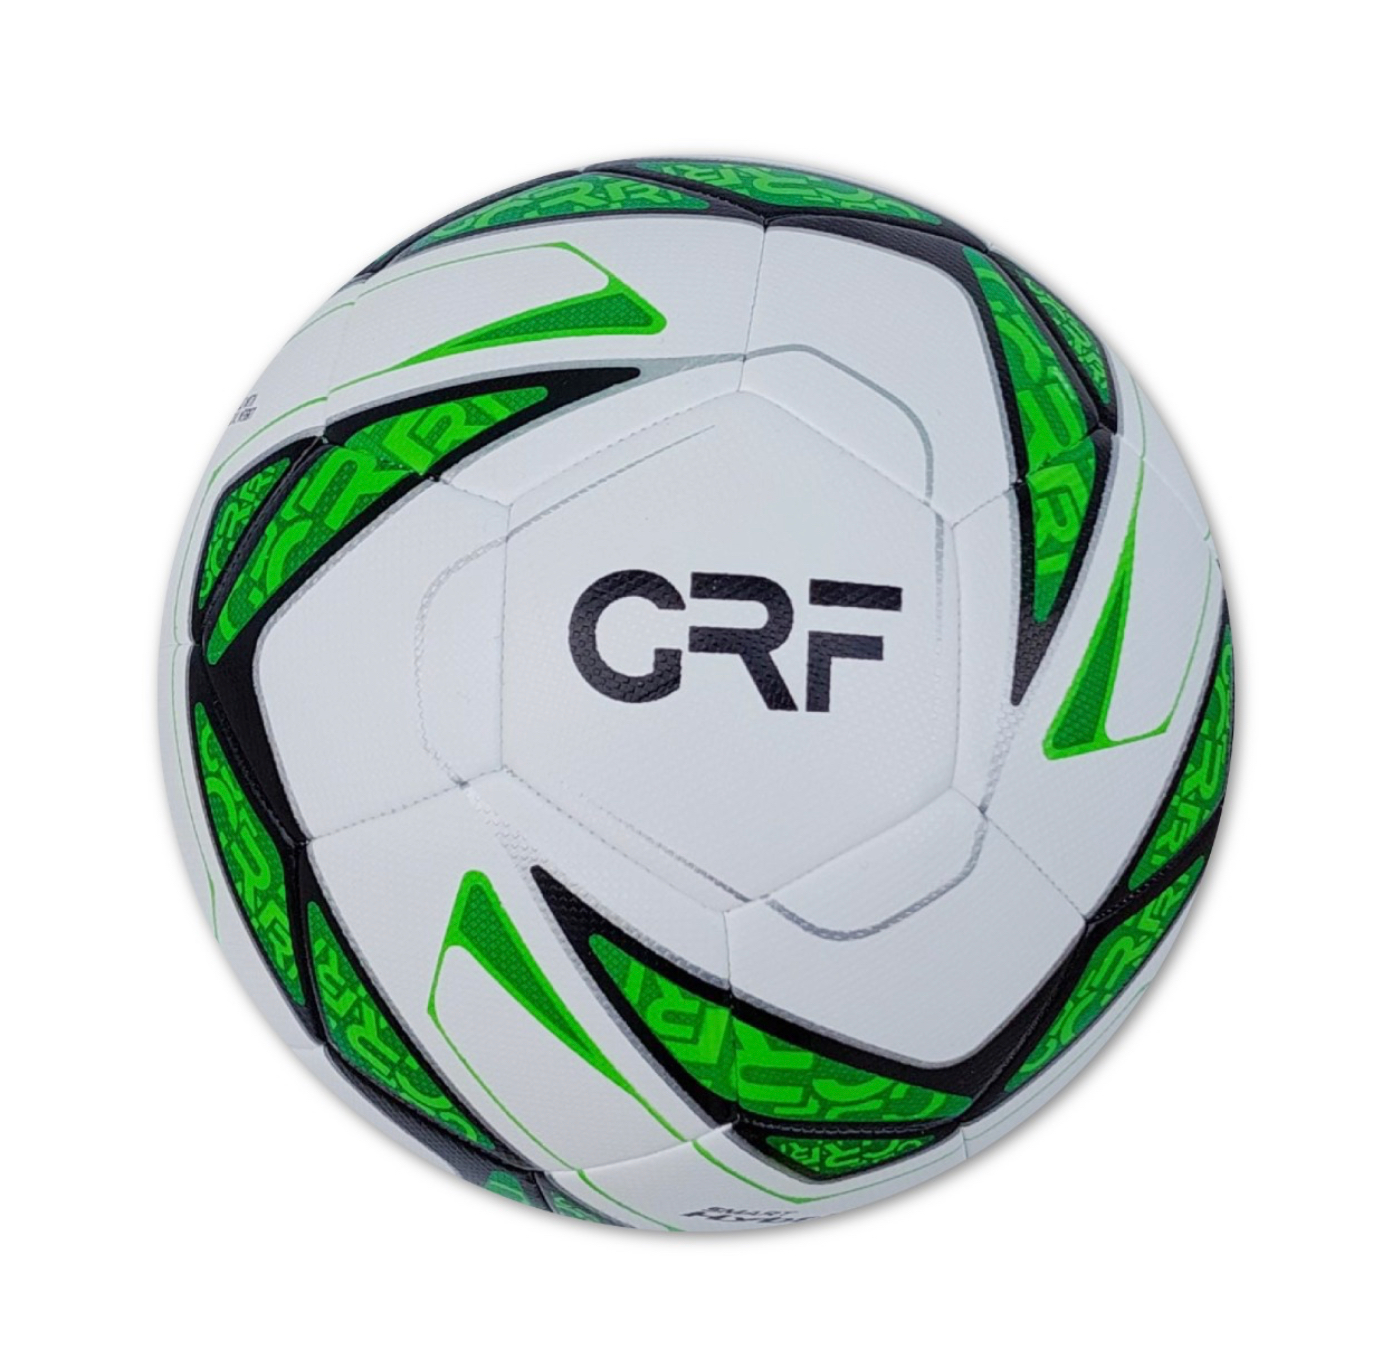 GRF Vortex Matchball